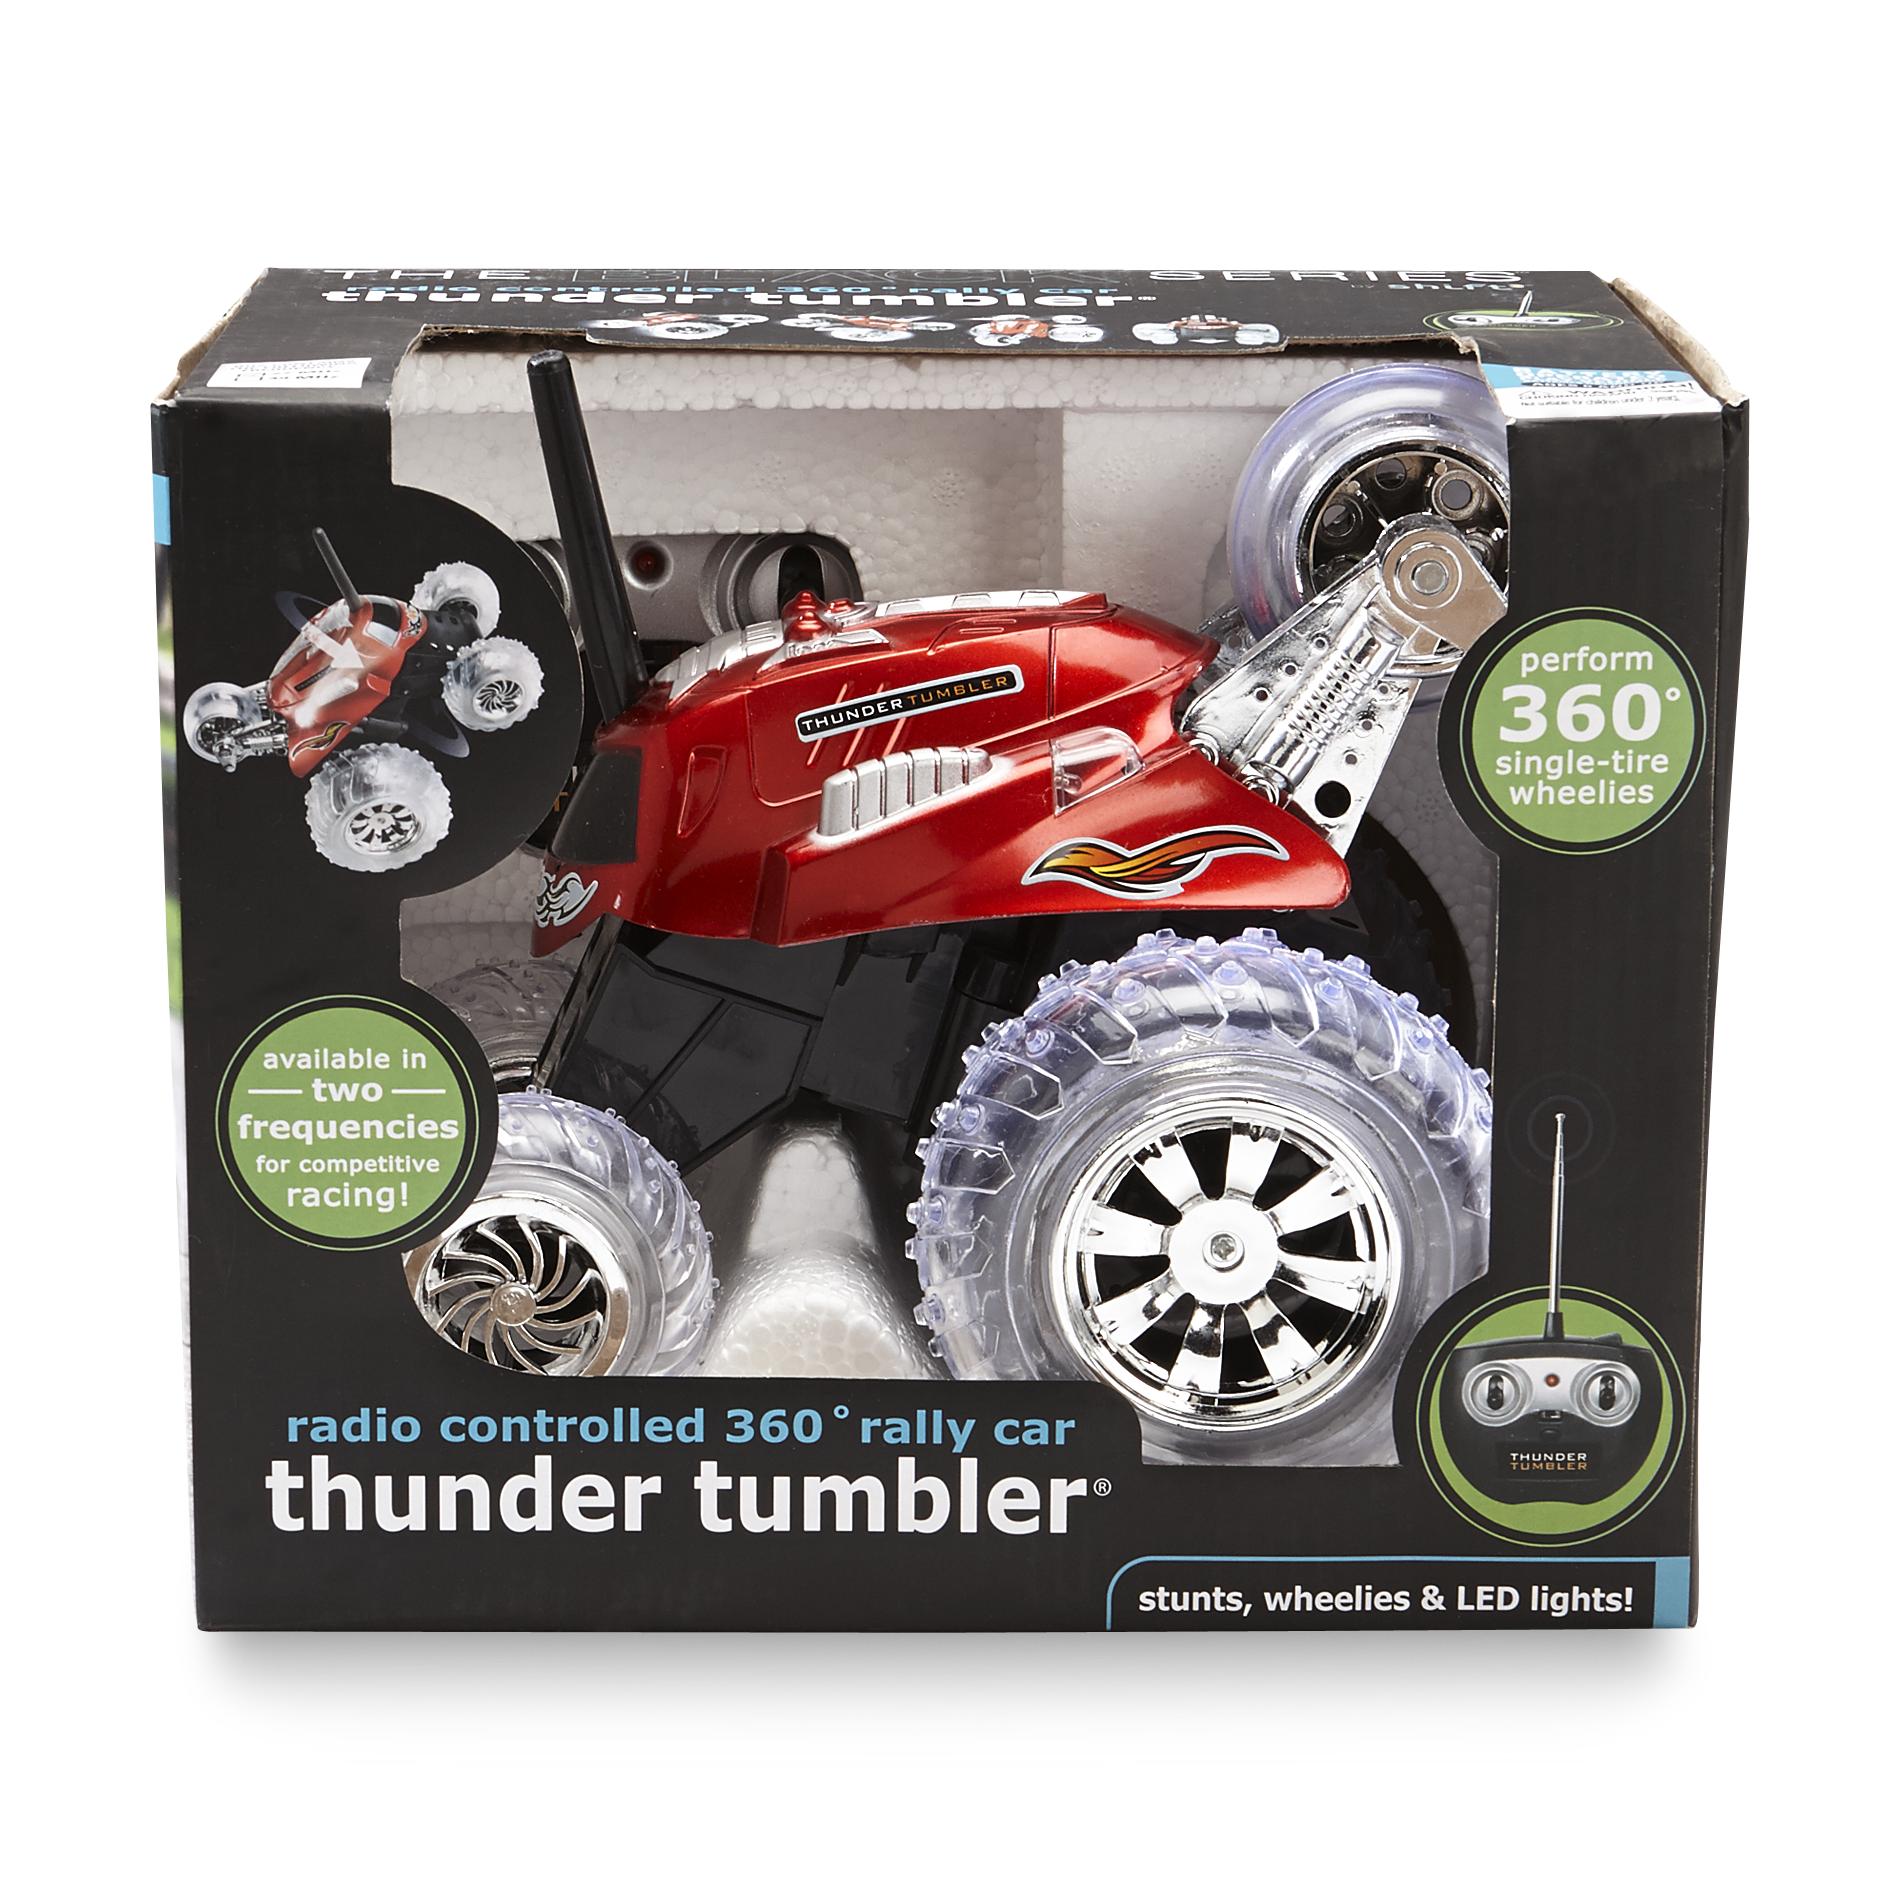 thunder tumbler rally car